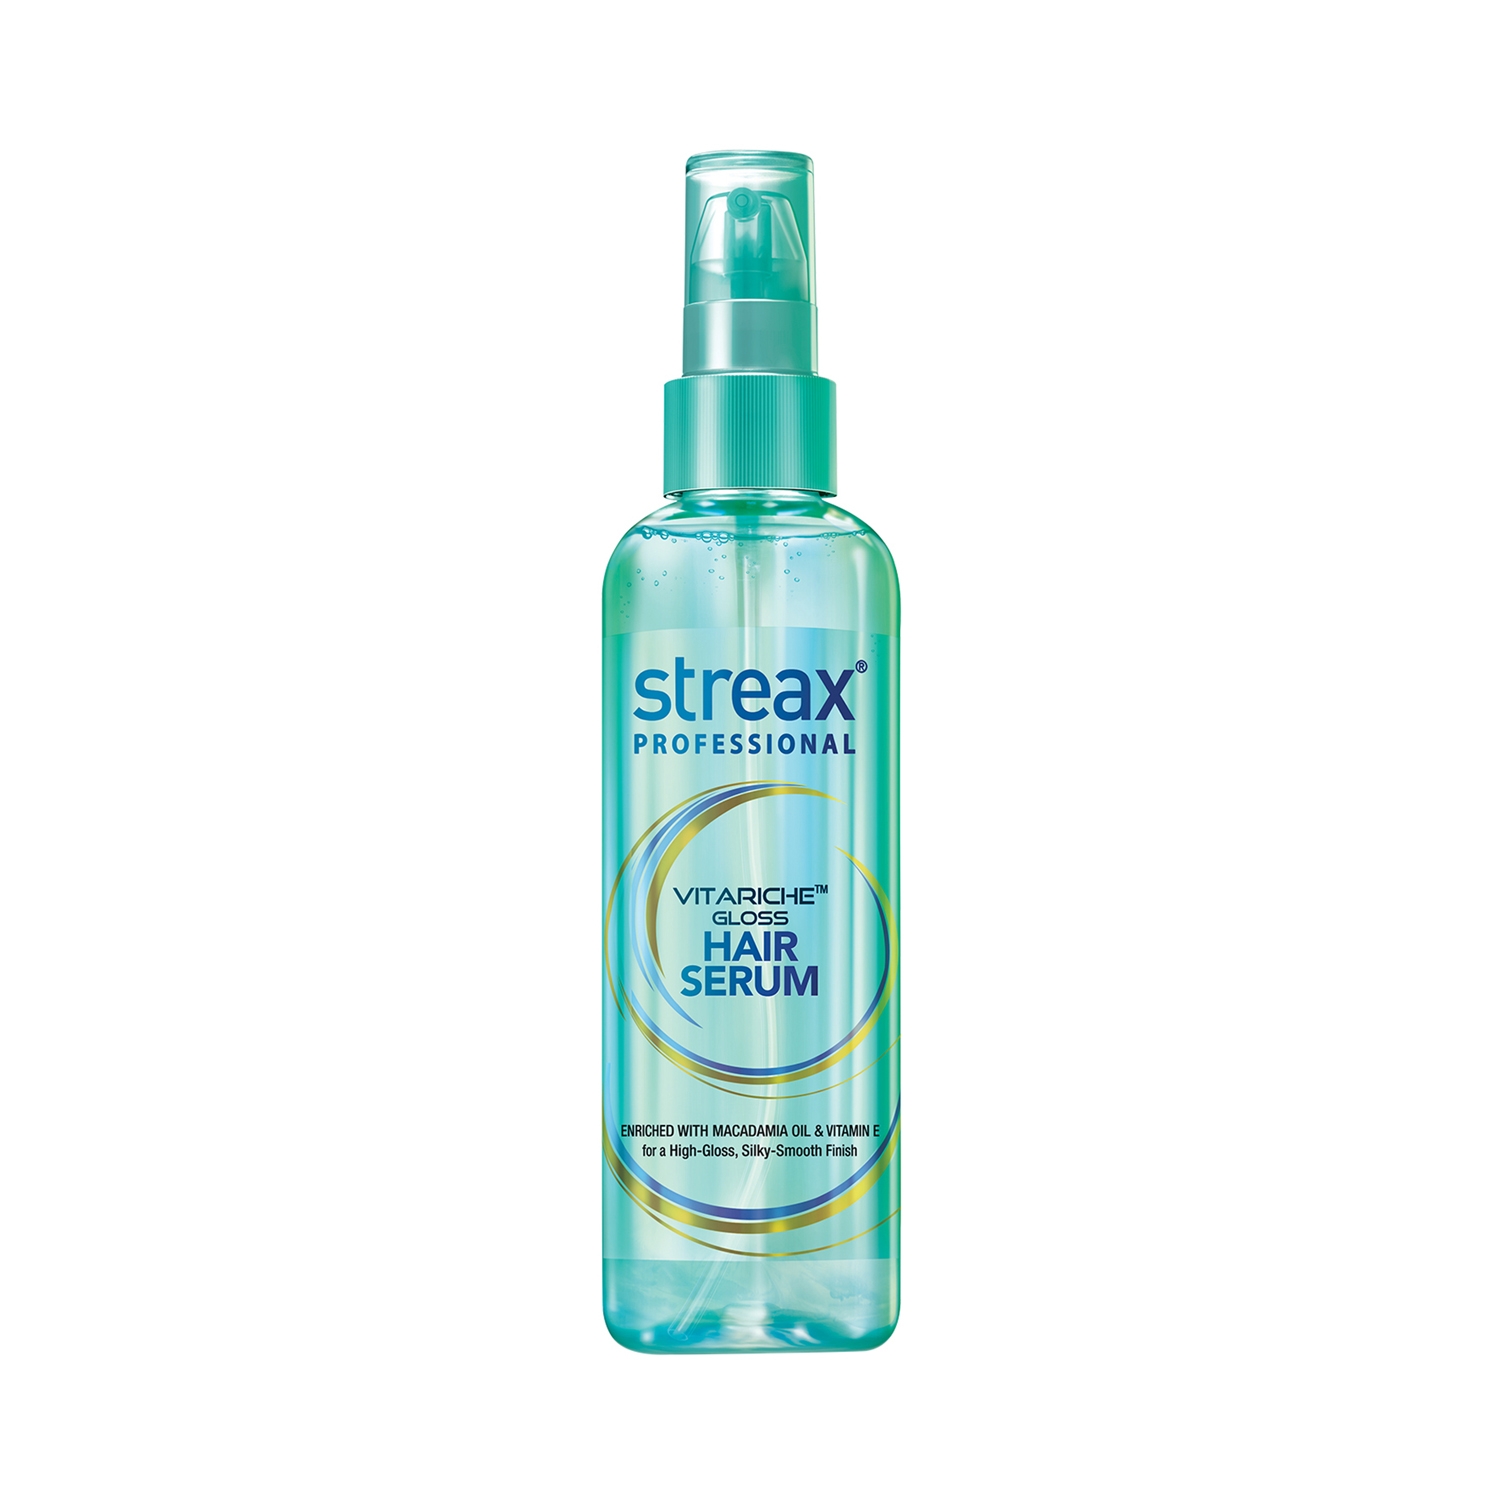 Streax Professional | Streax Professional Vitarich Gloss Hair Serum (200ml)